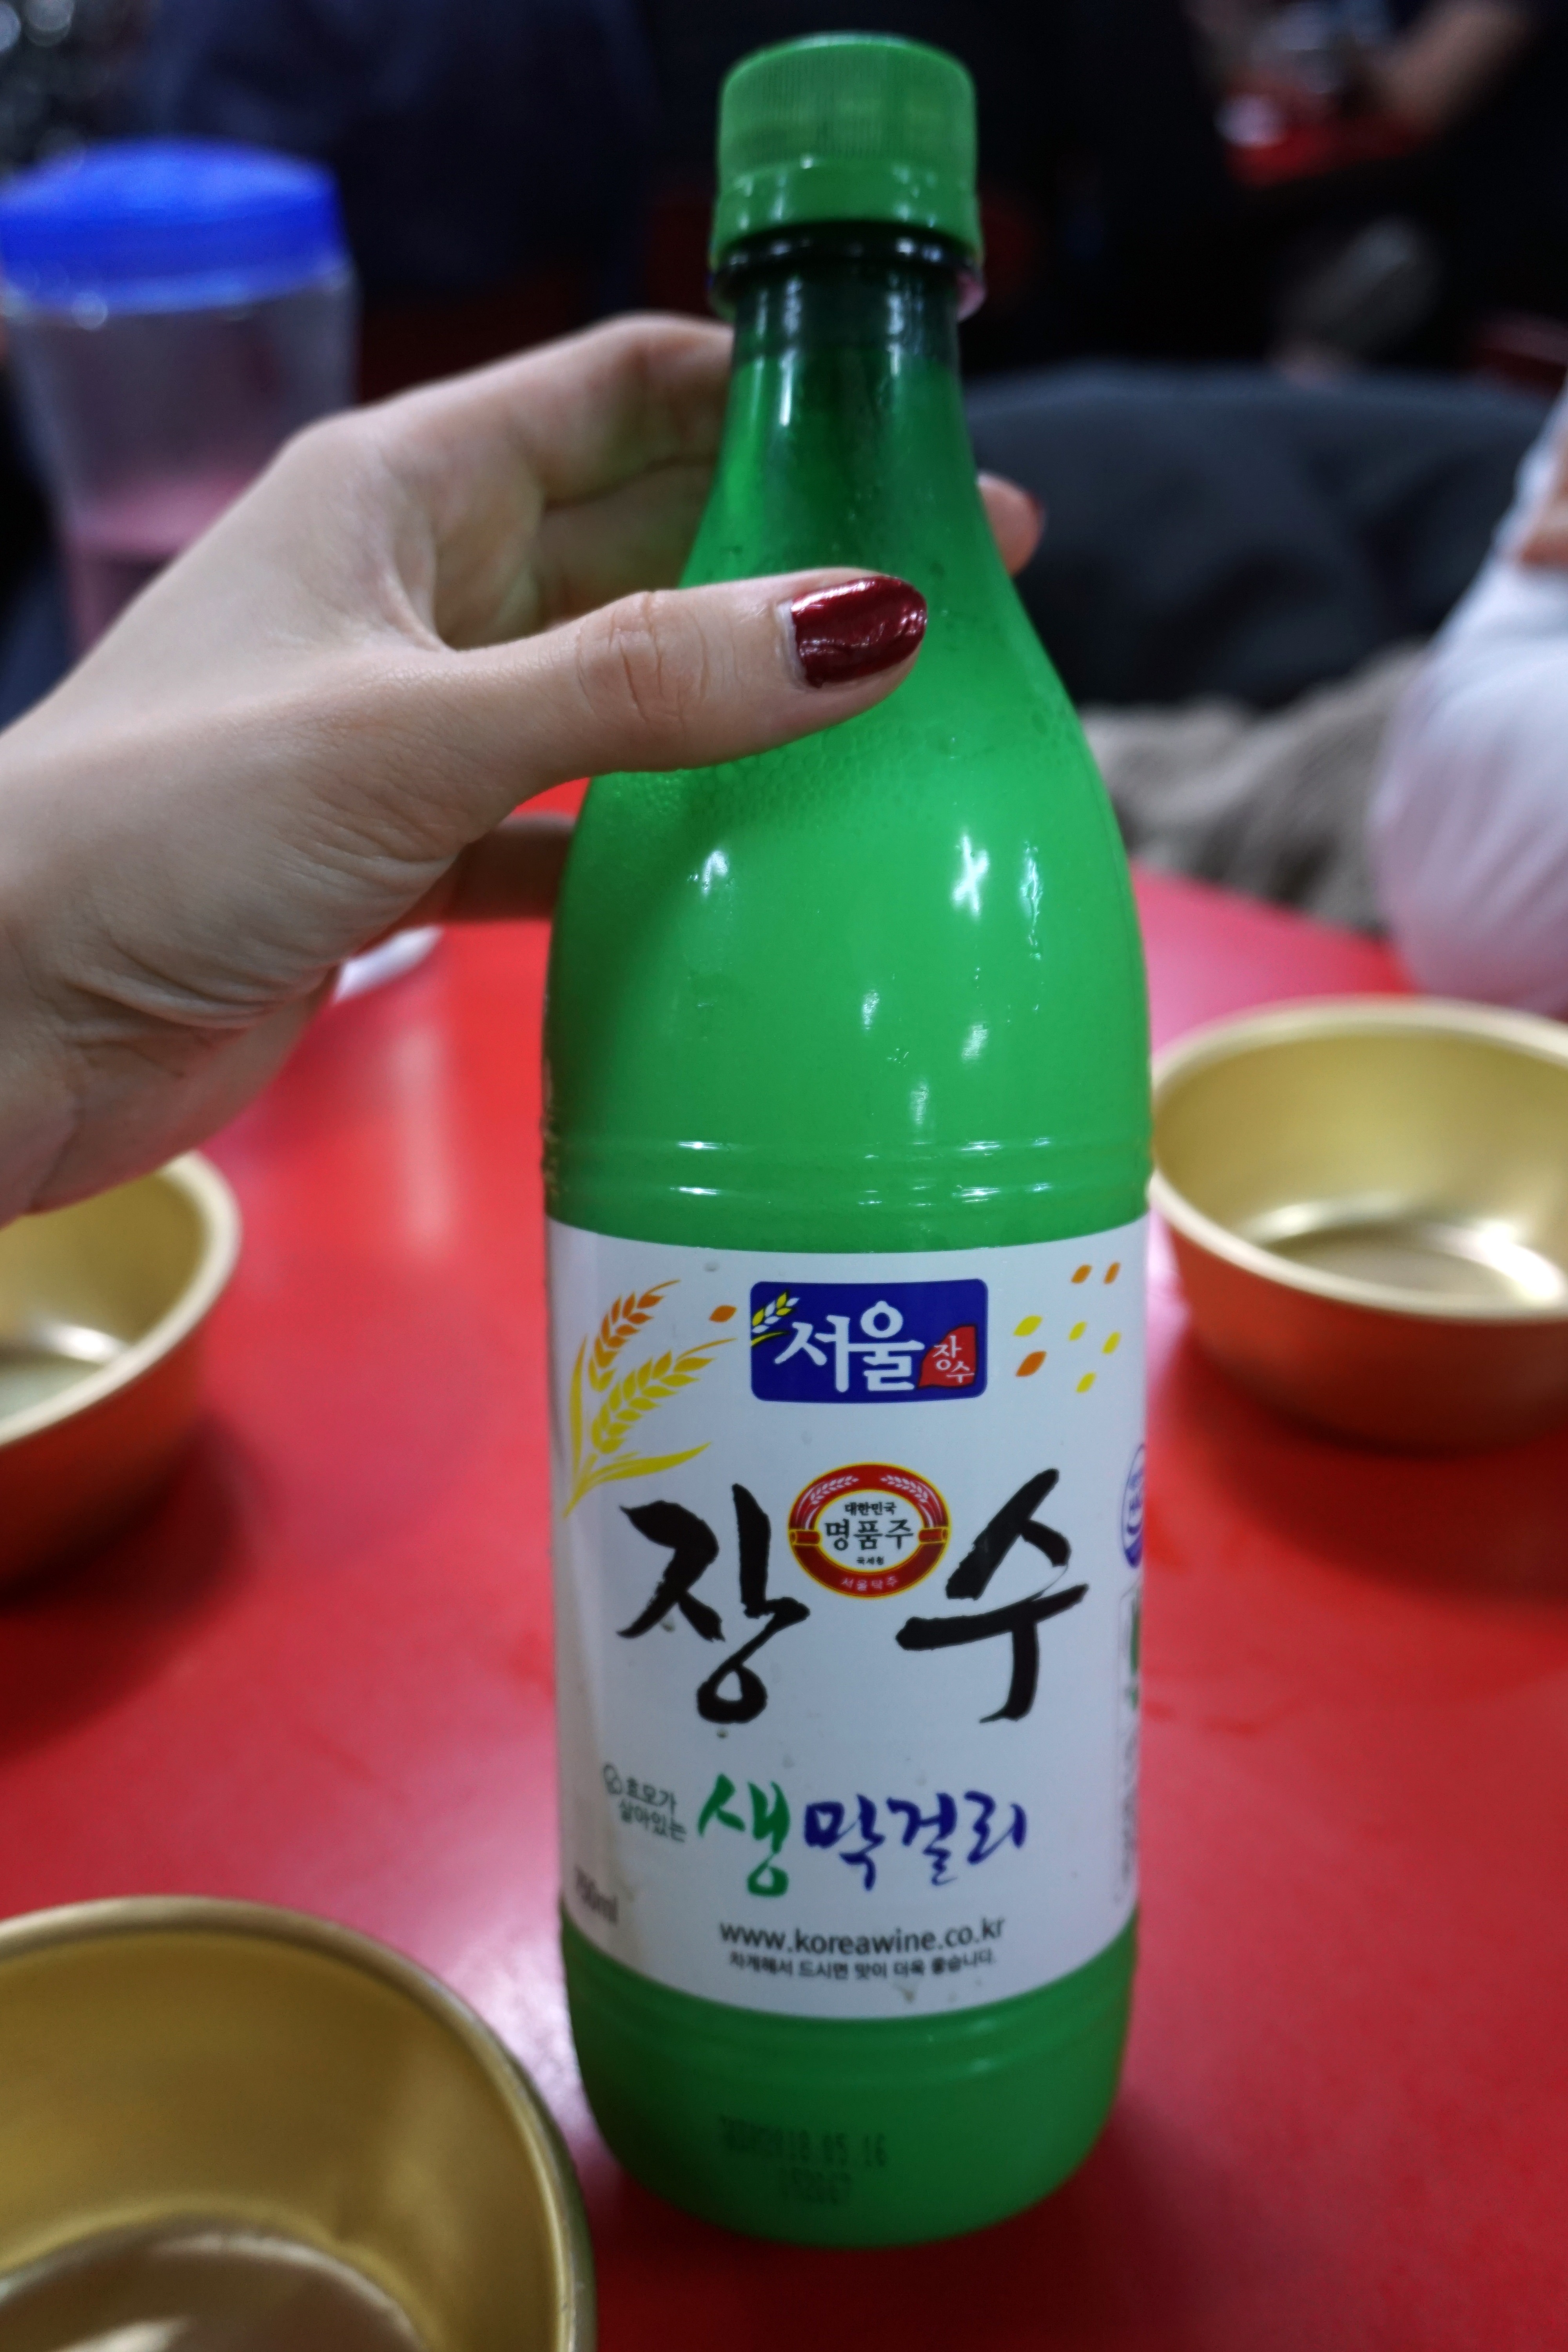 Saeng makgeolli - Korean rice wine